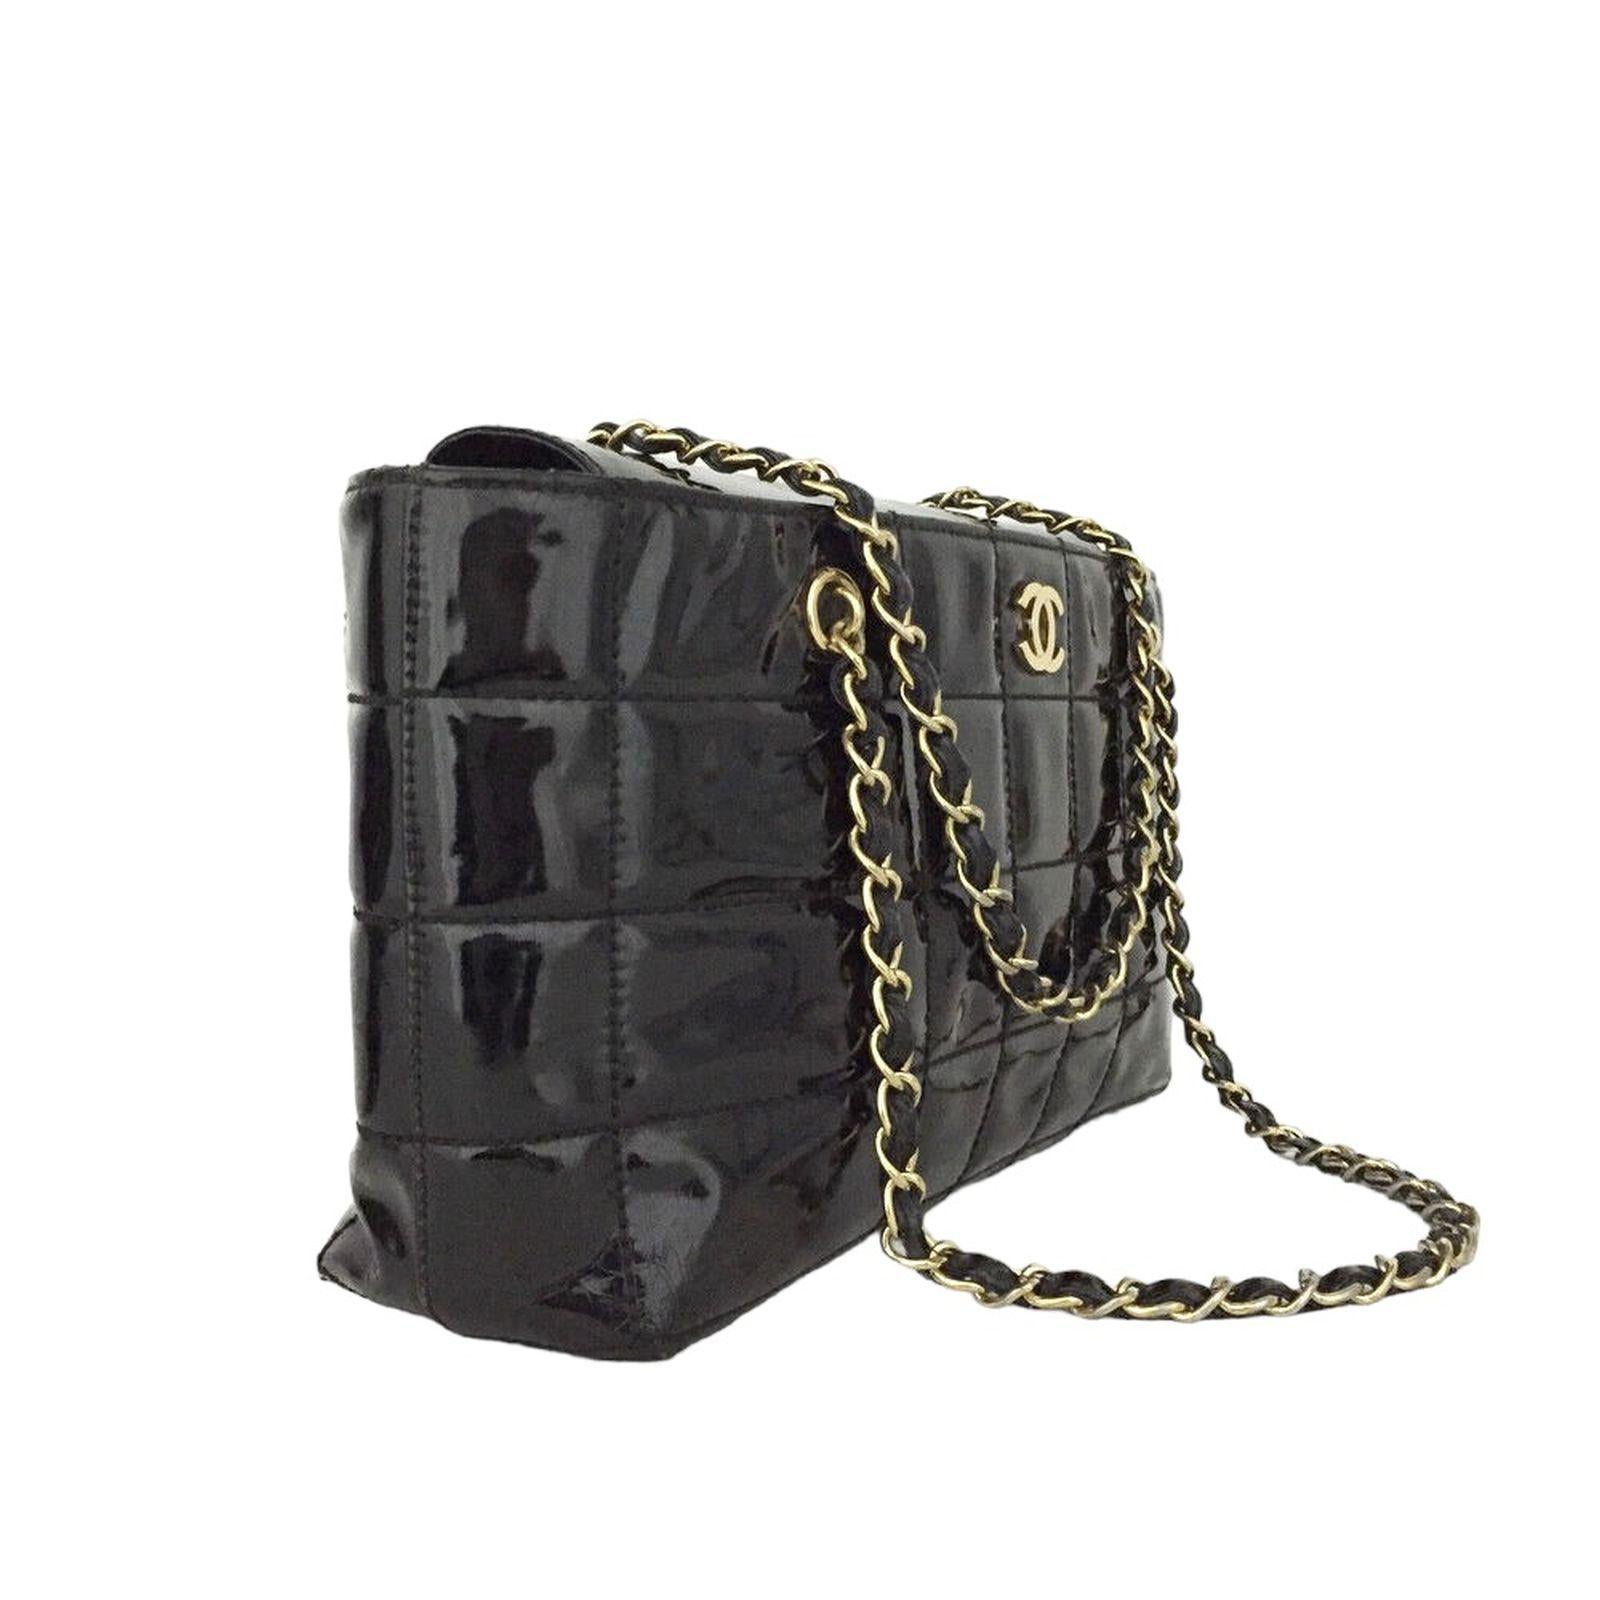 Vintage Classic Chanel Black Enamel Shoulder Bag In Excellent Condition For Sale In Pasadena, CA